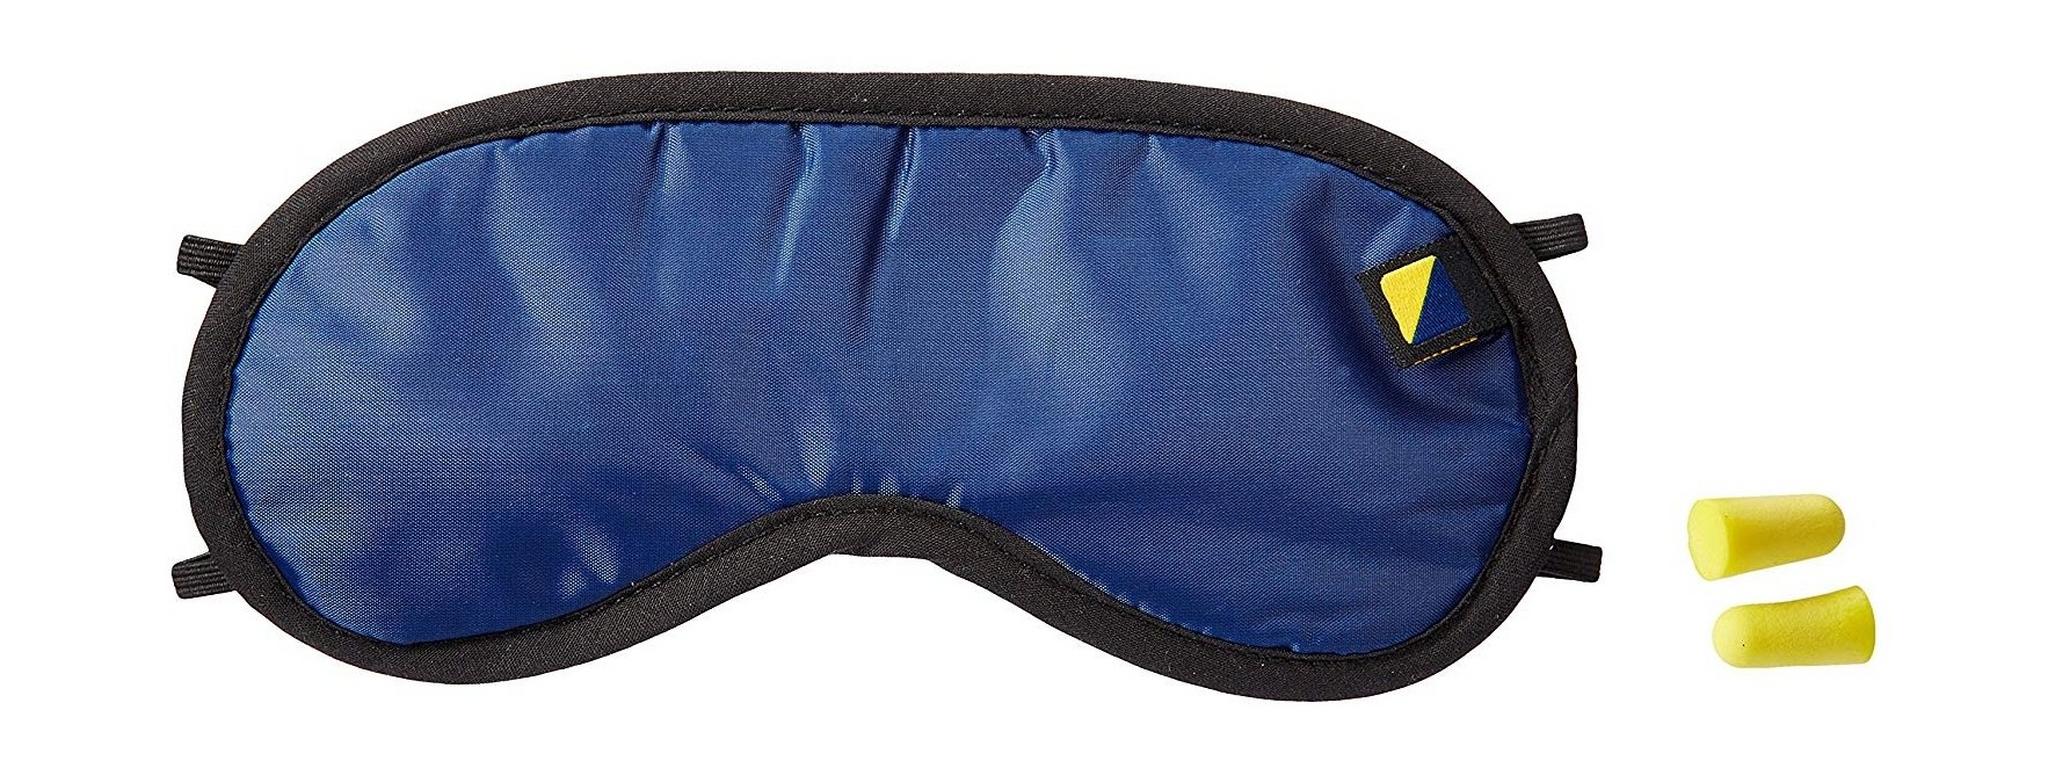 Travel Blue Earplug And Eye mask Comfort Set